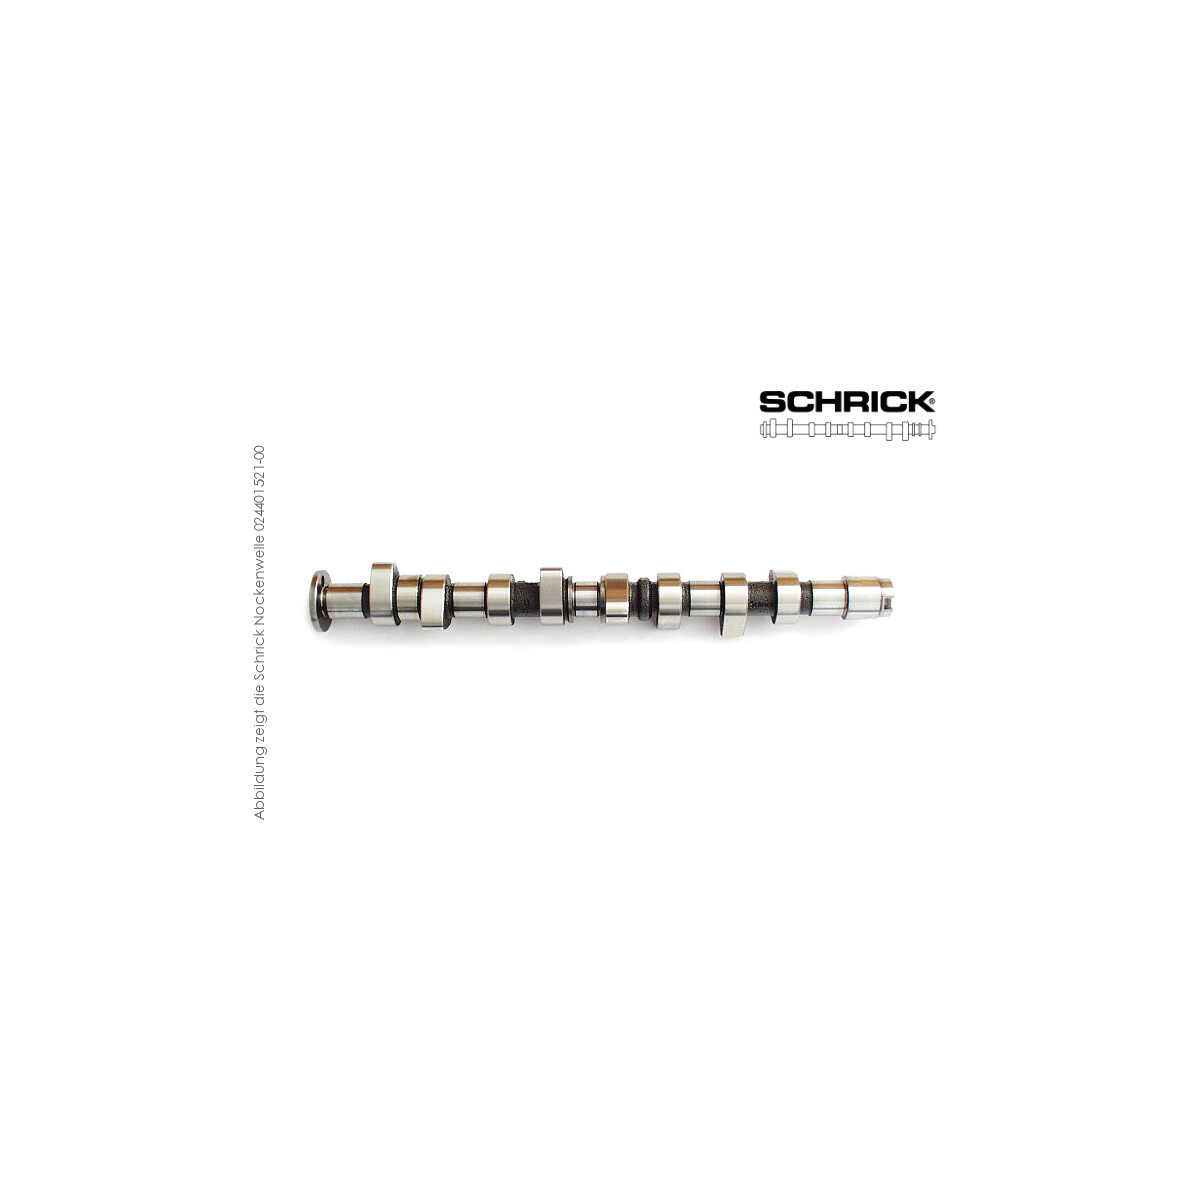 Schrick Nockenwelle für Audi 80, 90 | 1,8-2,0L 16V 4-Zyl. , 16V | 284° Einlassnockenwelle (Schrick 0220E1840-03)